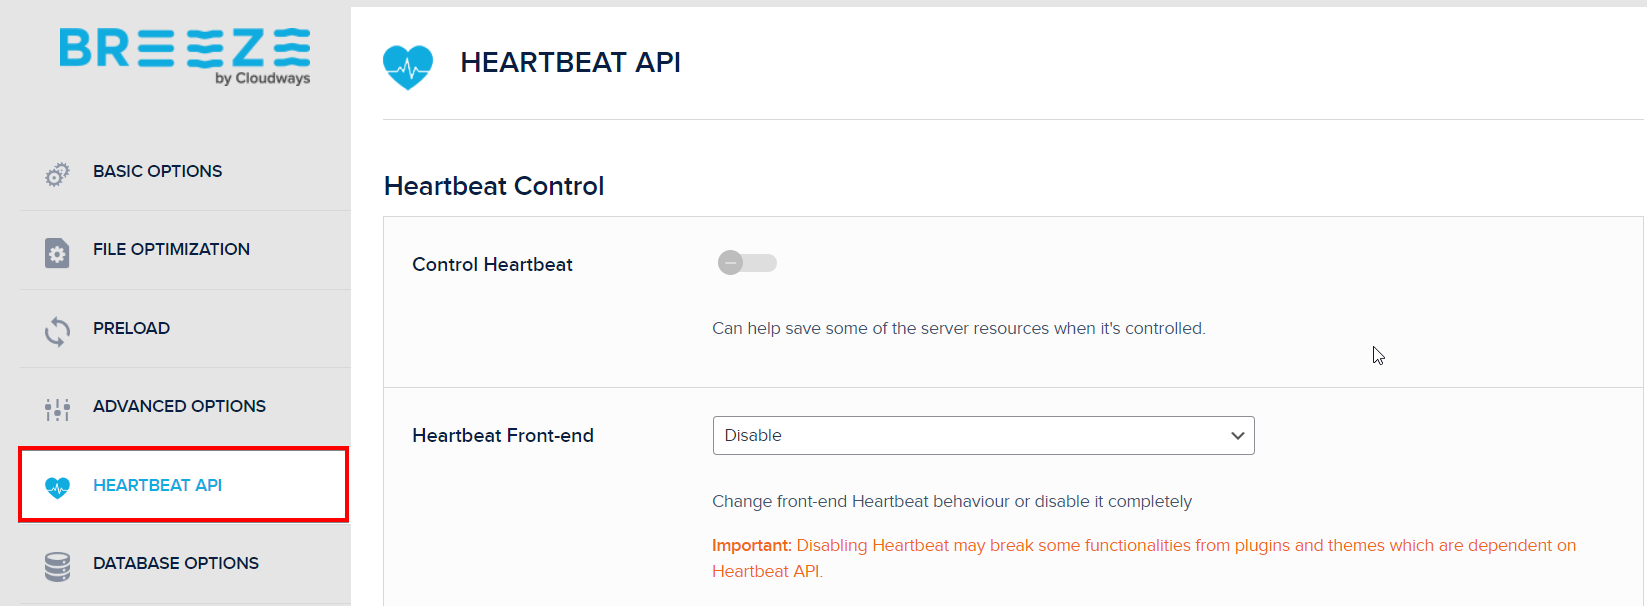 Hearbeat API Breeze Plugin